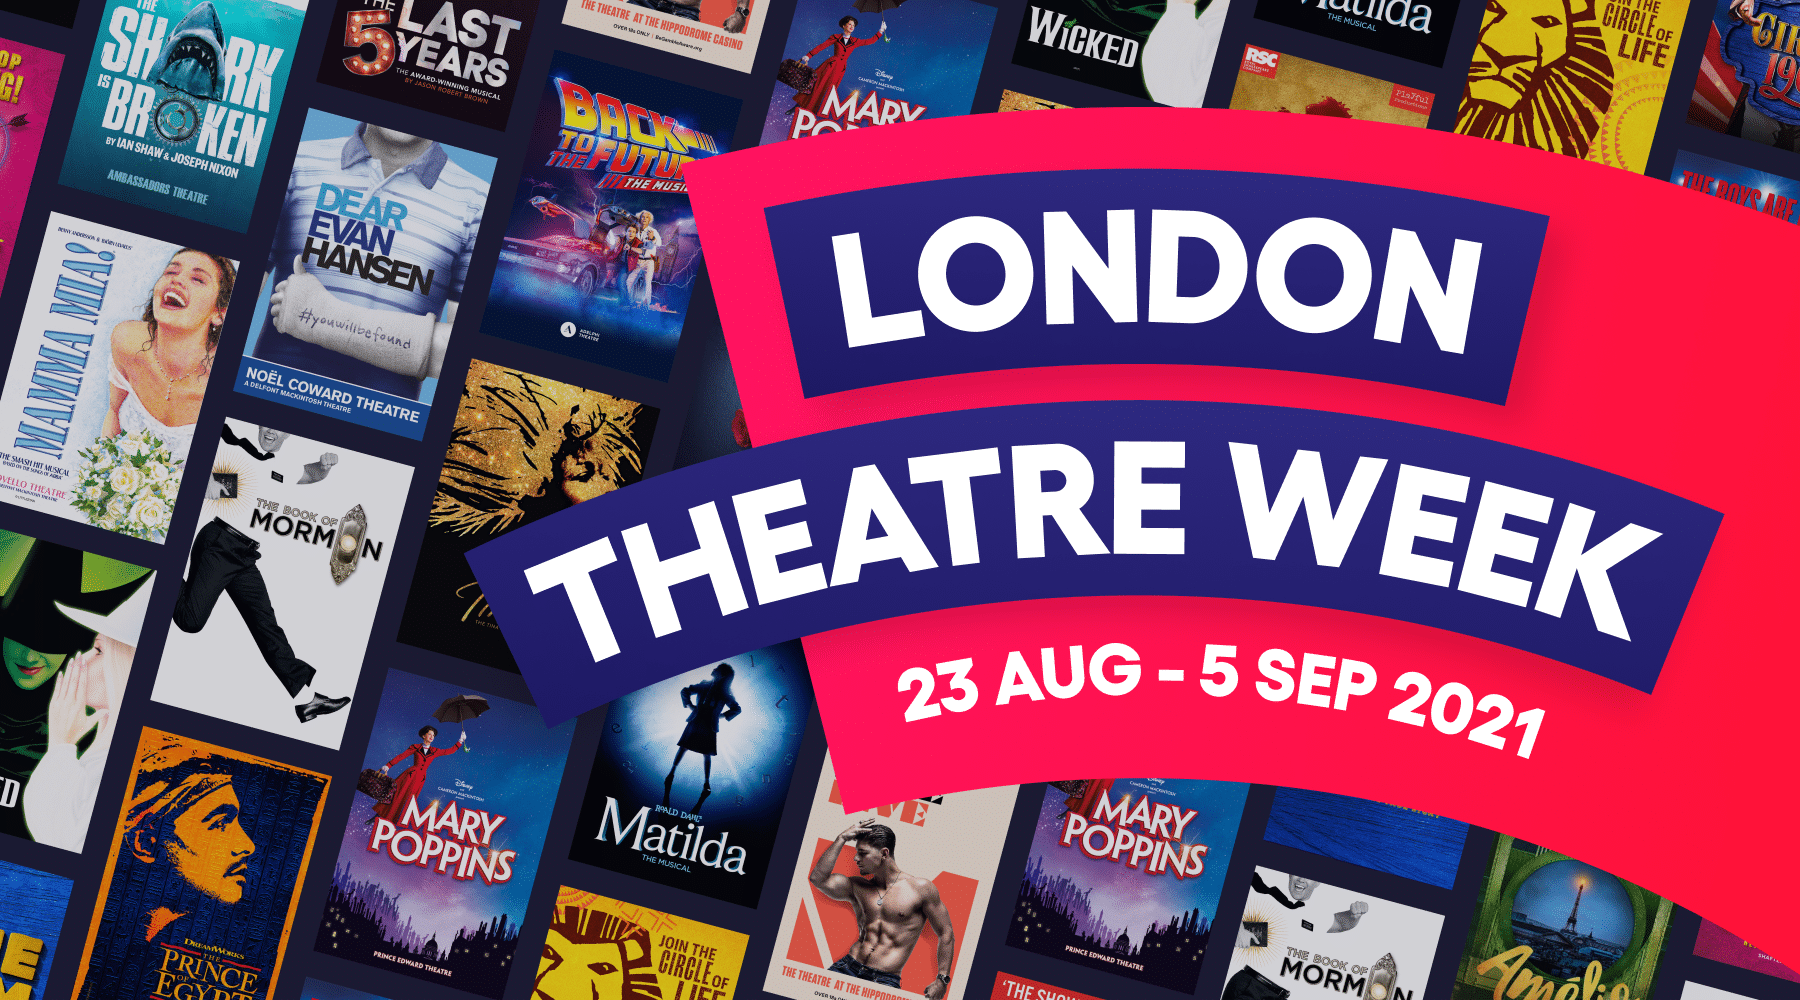 London Theatre Week announced 23 August 5 September